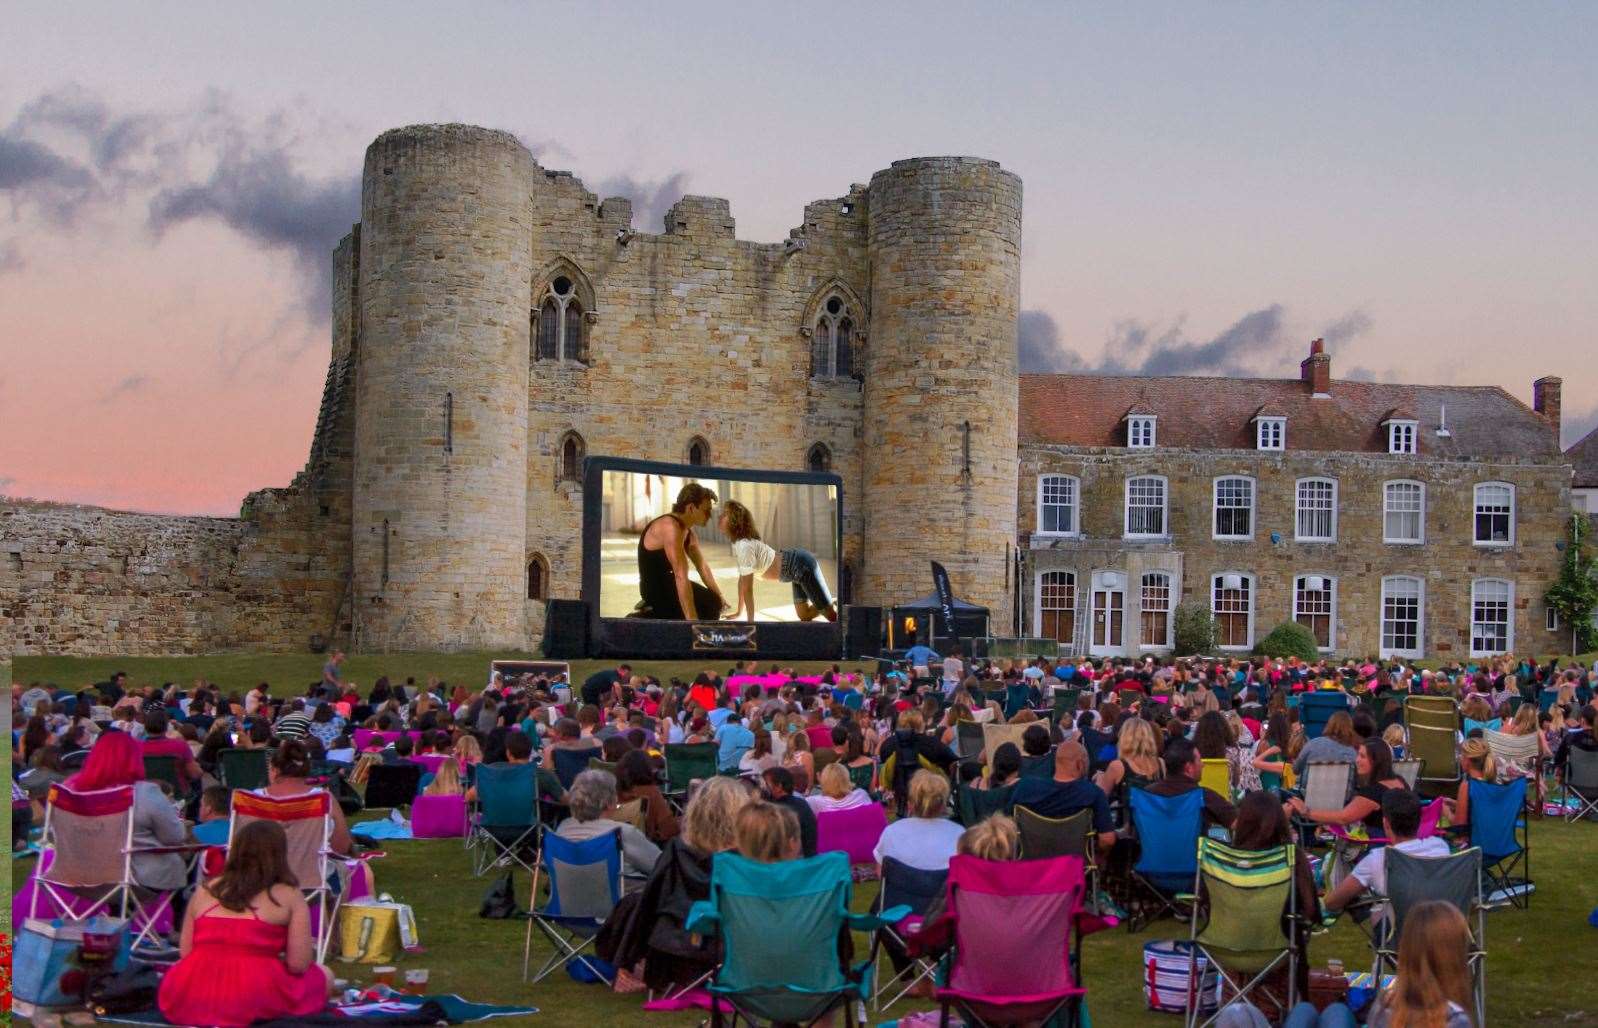 The Luna cinema screenings at Tonbridge Castle include Dirty Dancing